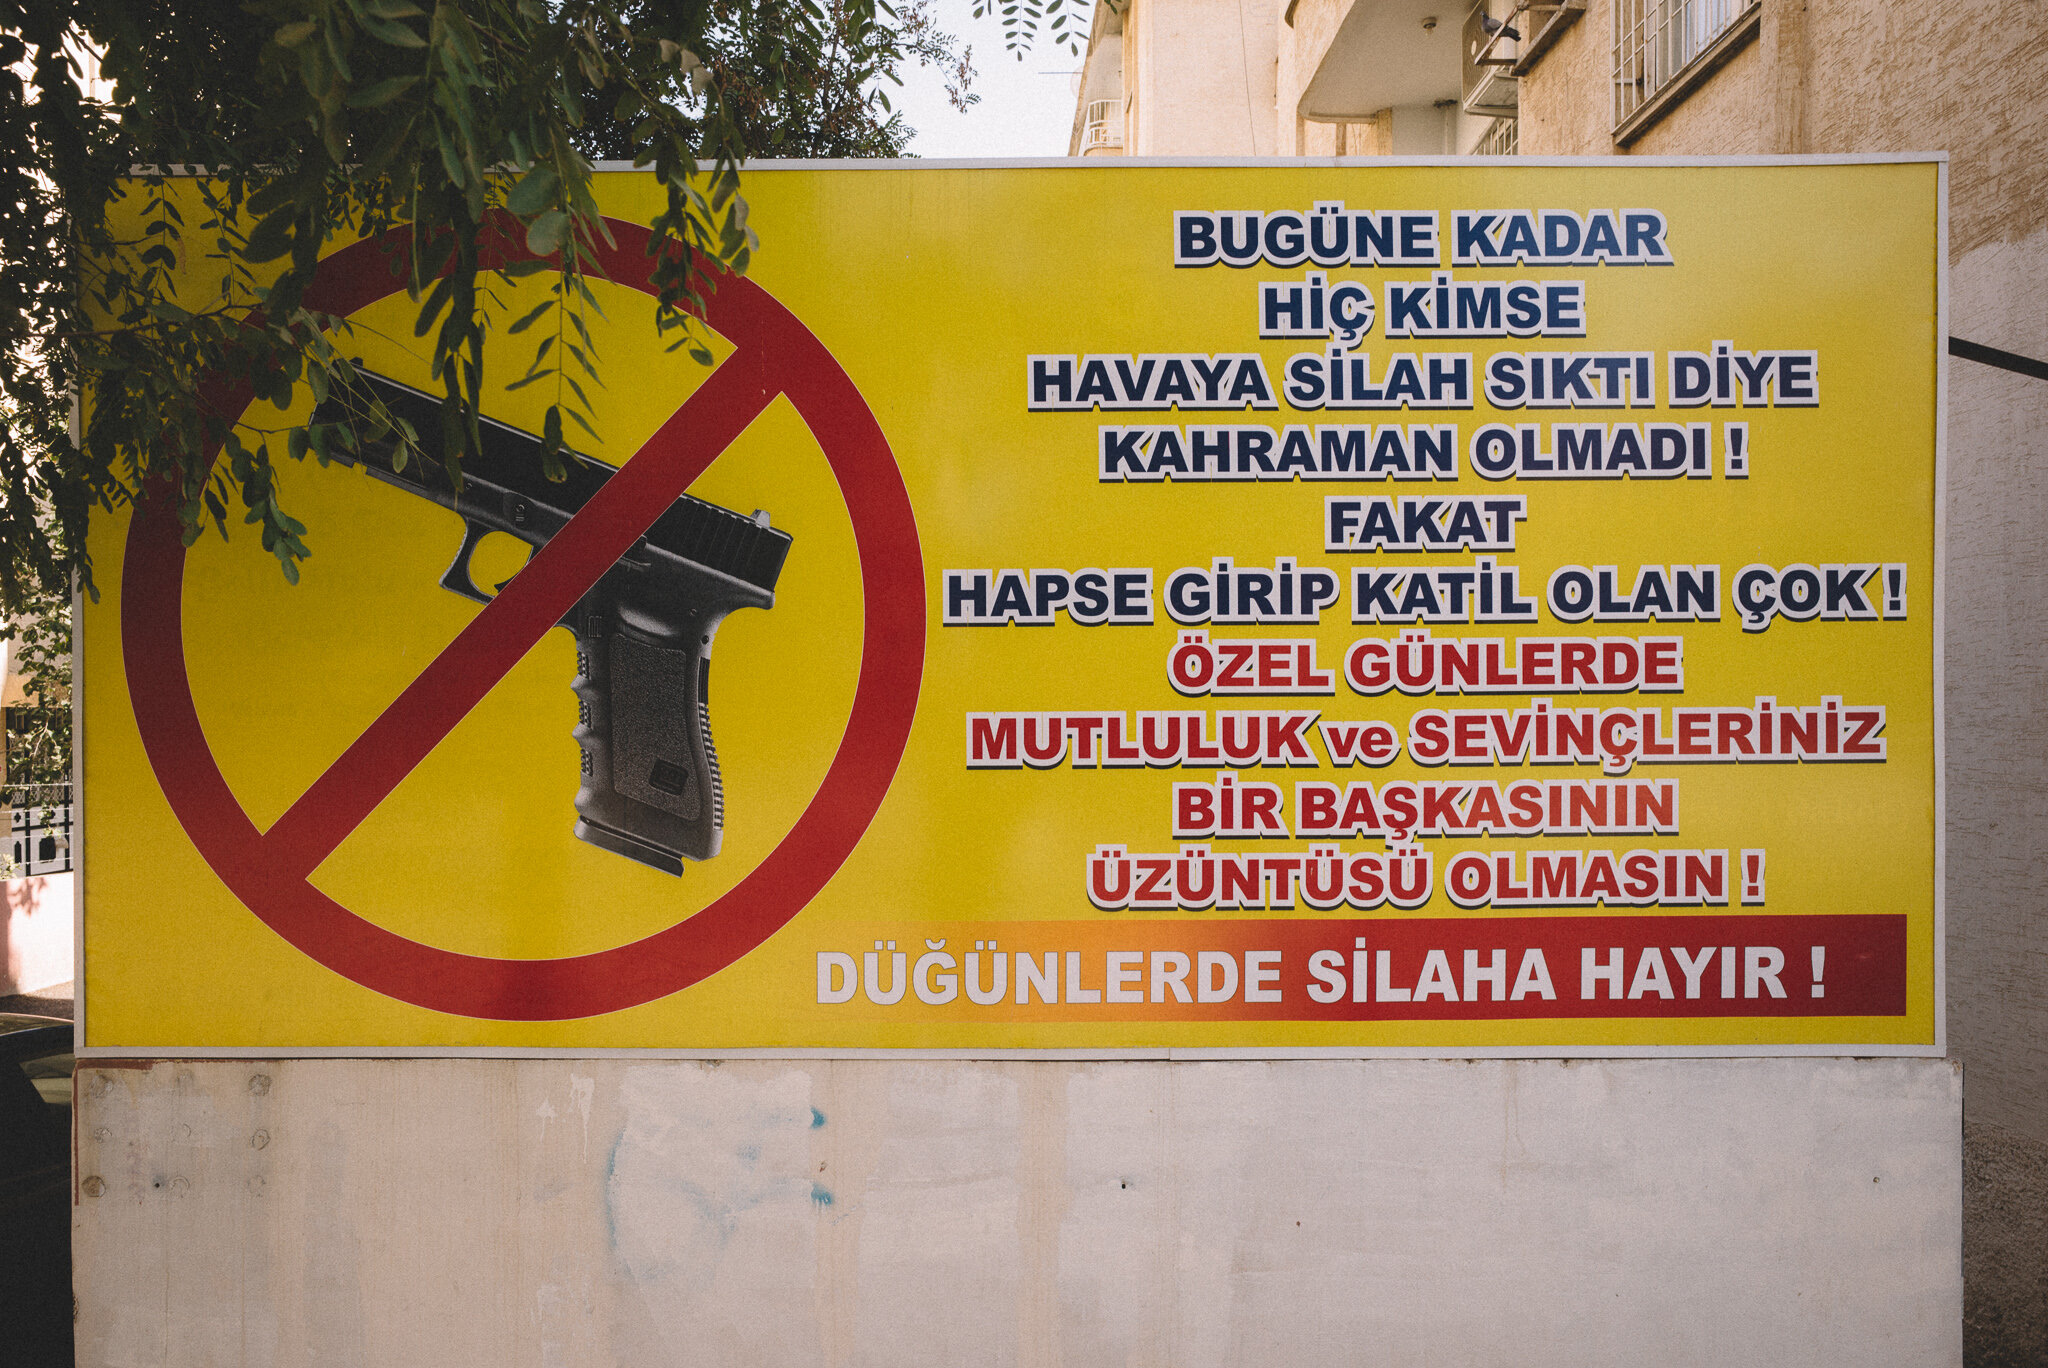 No guns...